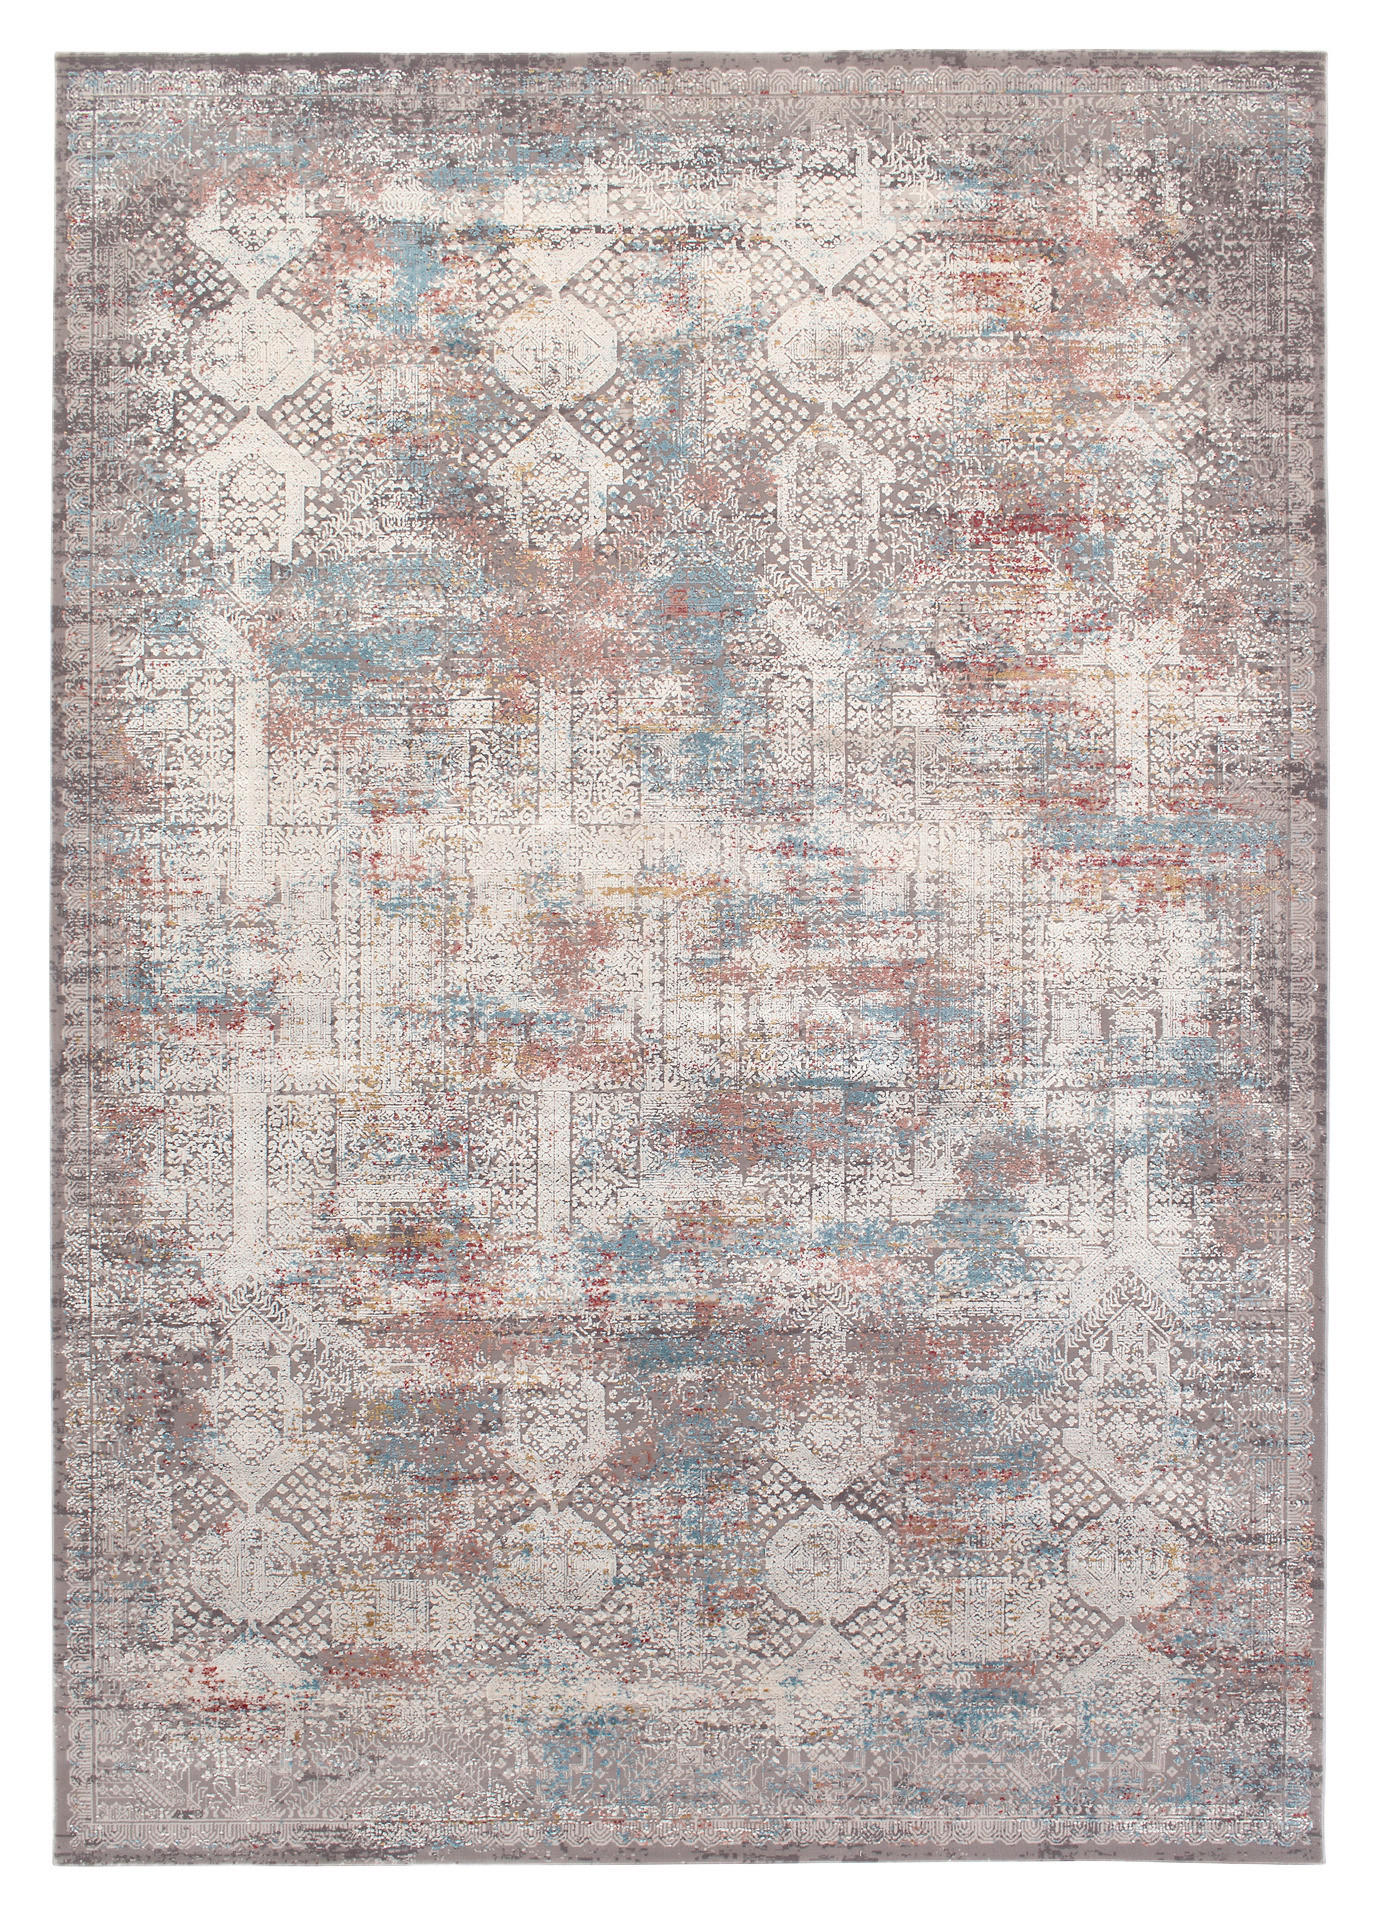 WEBTEPPICH  160/230 cm  Multicolor   - Multicolor, Design, Textil (160/230cm) - Musterring